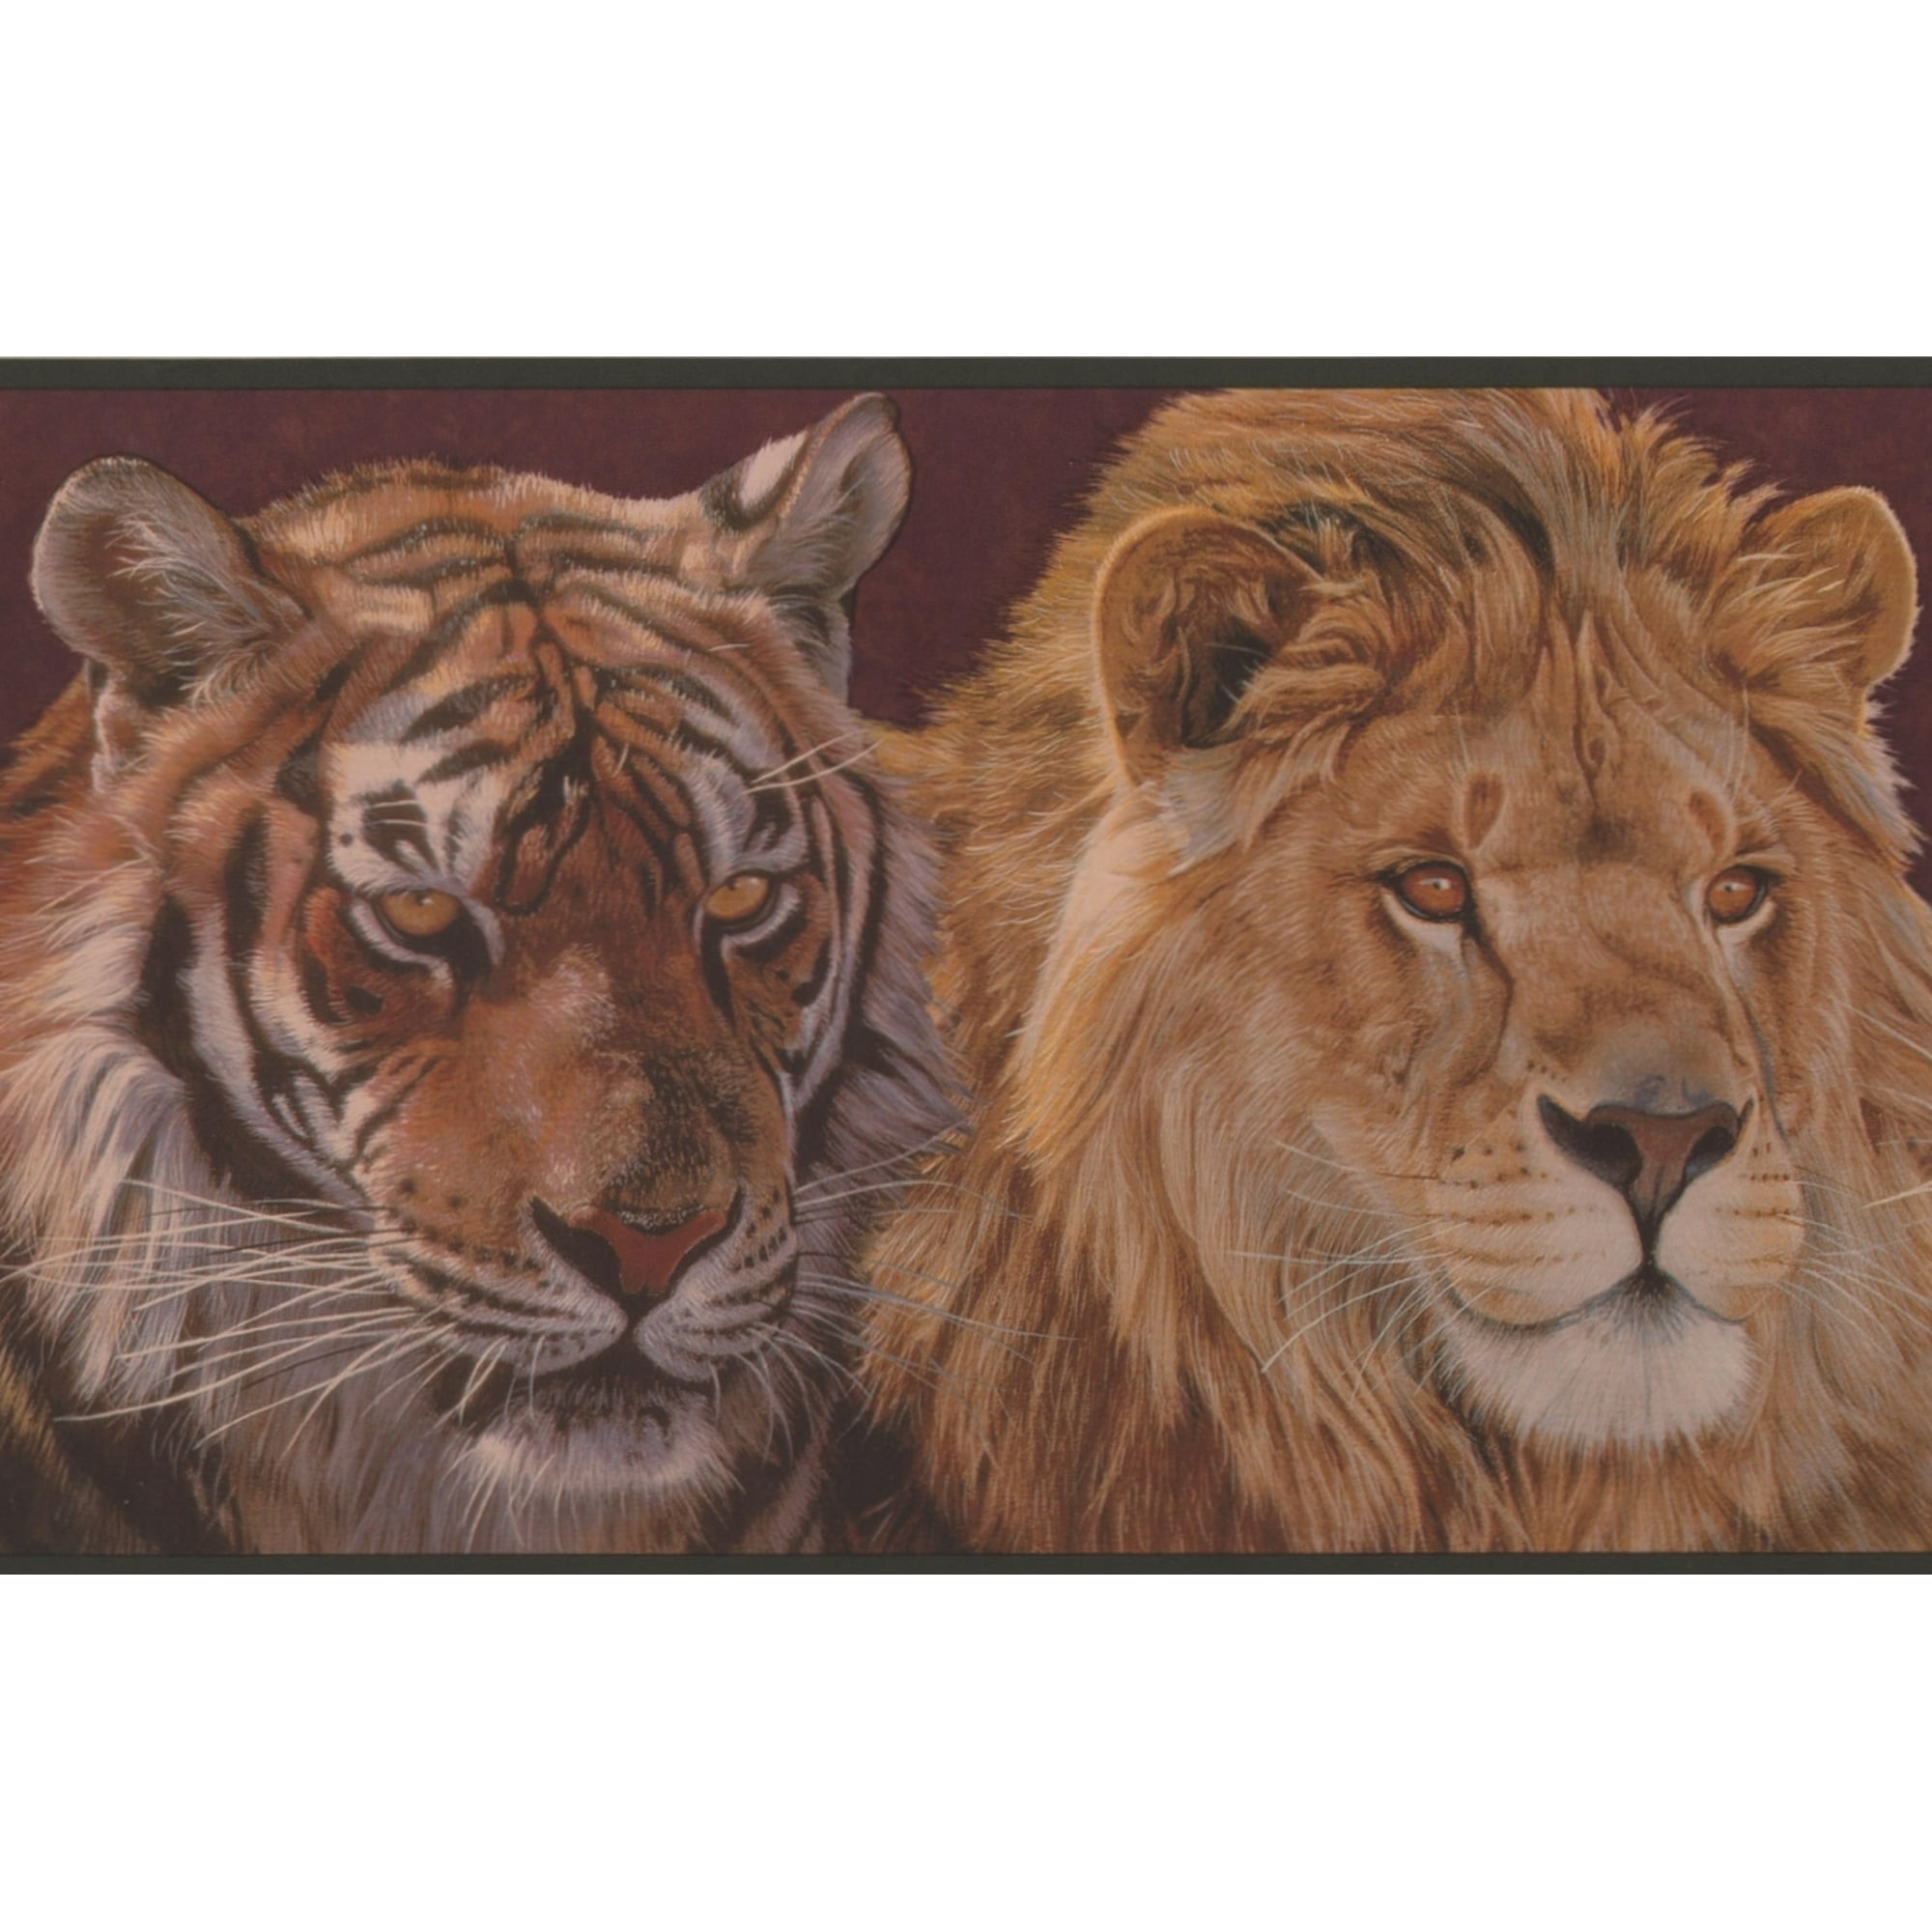 Tiger Lion Jaguar Wine Red Animals Wallpaper Border Retro Design Kitchen  Bedroom Playroom, Roll 15' x 10